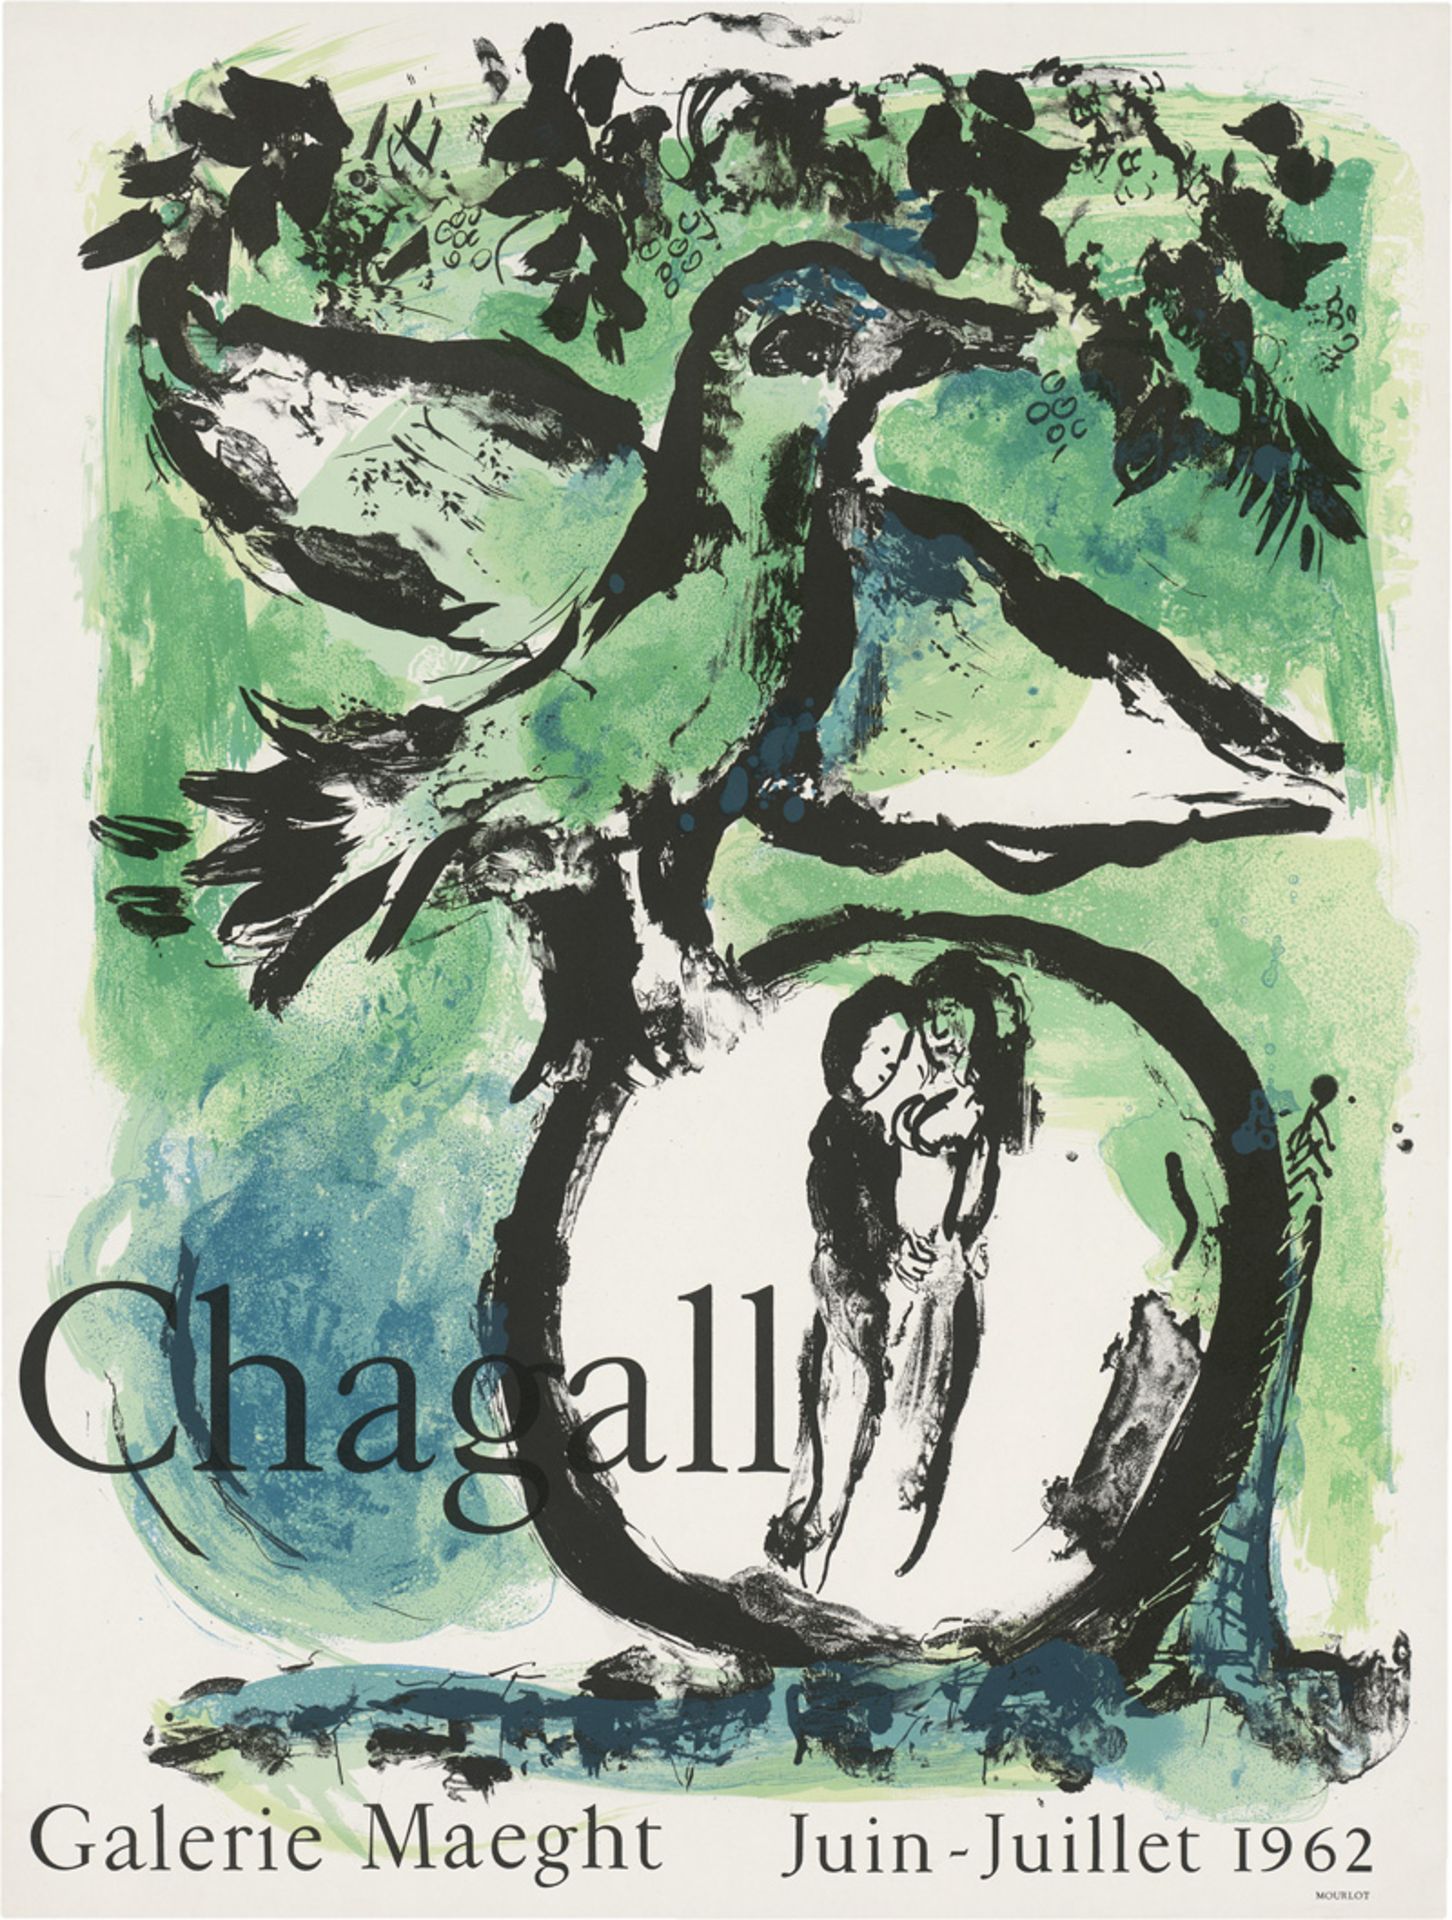 Chagall, Marc: Grüner Vogel. "Galerie Maeght. Juin - Juillet 1962"